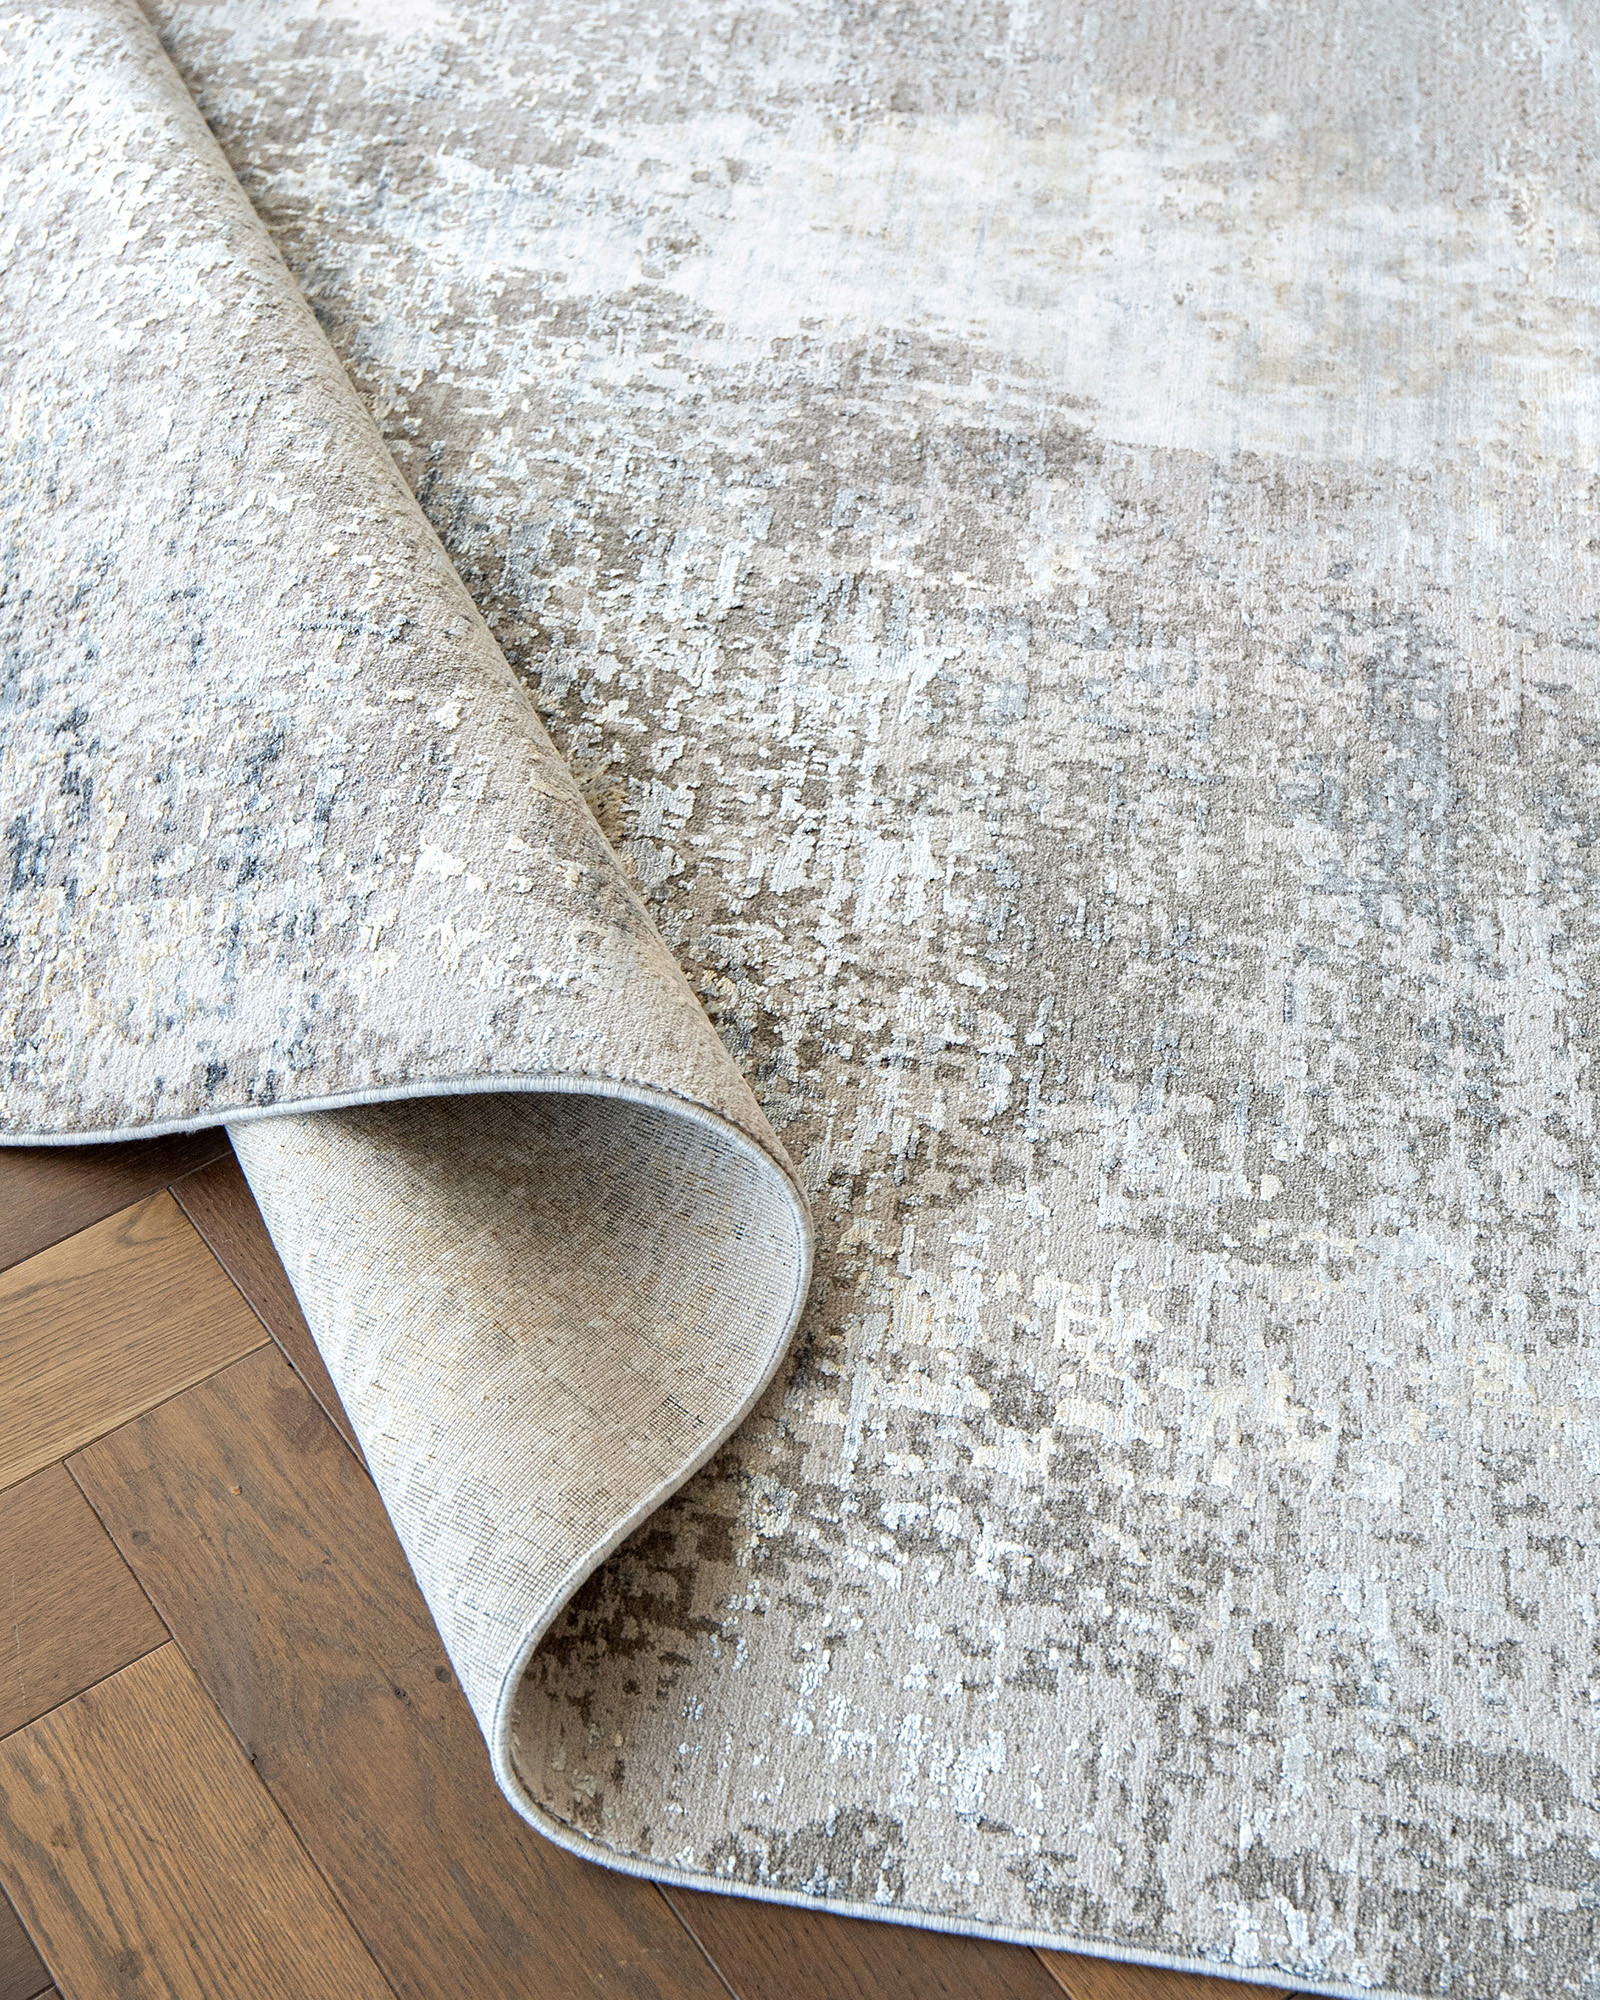 Jacob Ashton 300 cm (Round) Carpet Knot Home Designer Rug for Bedroom Living Dining Room Office Soft Non-slip Area Textile Decor